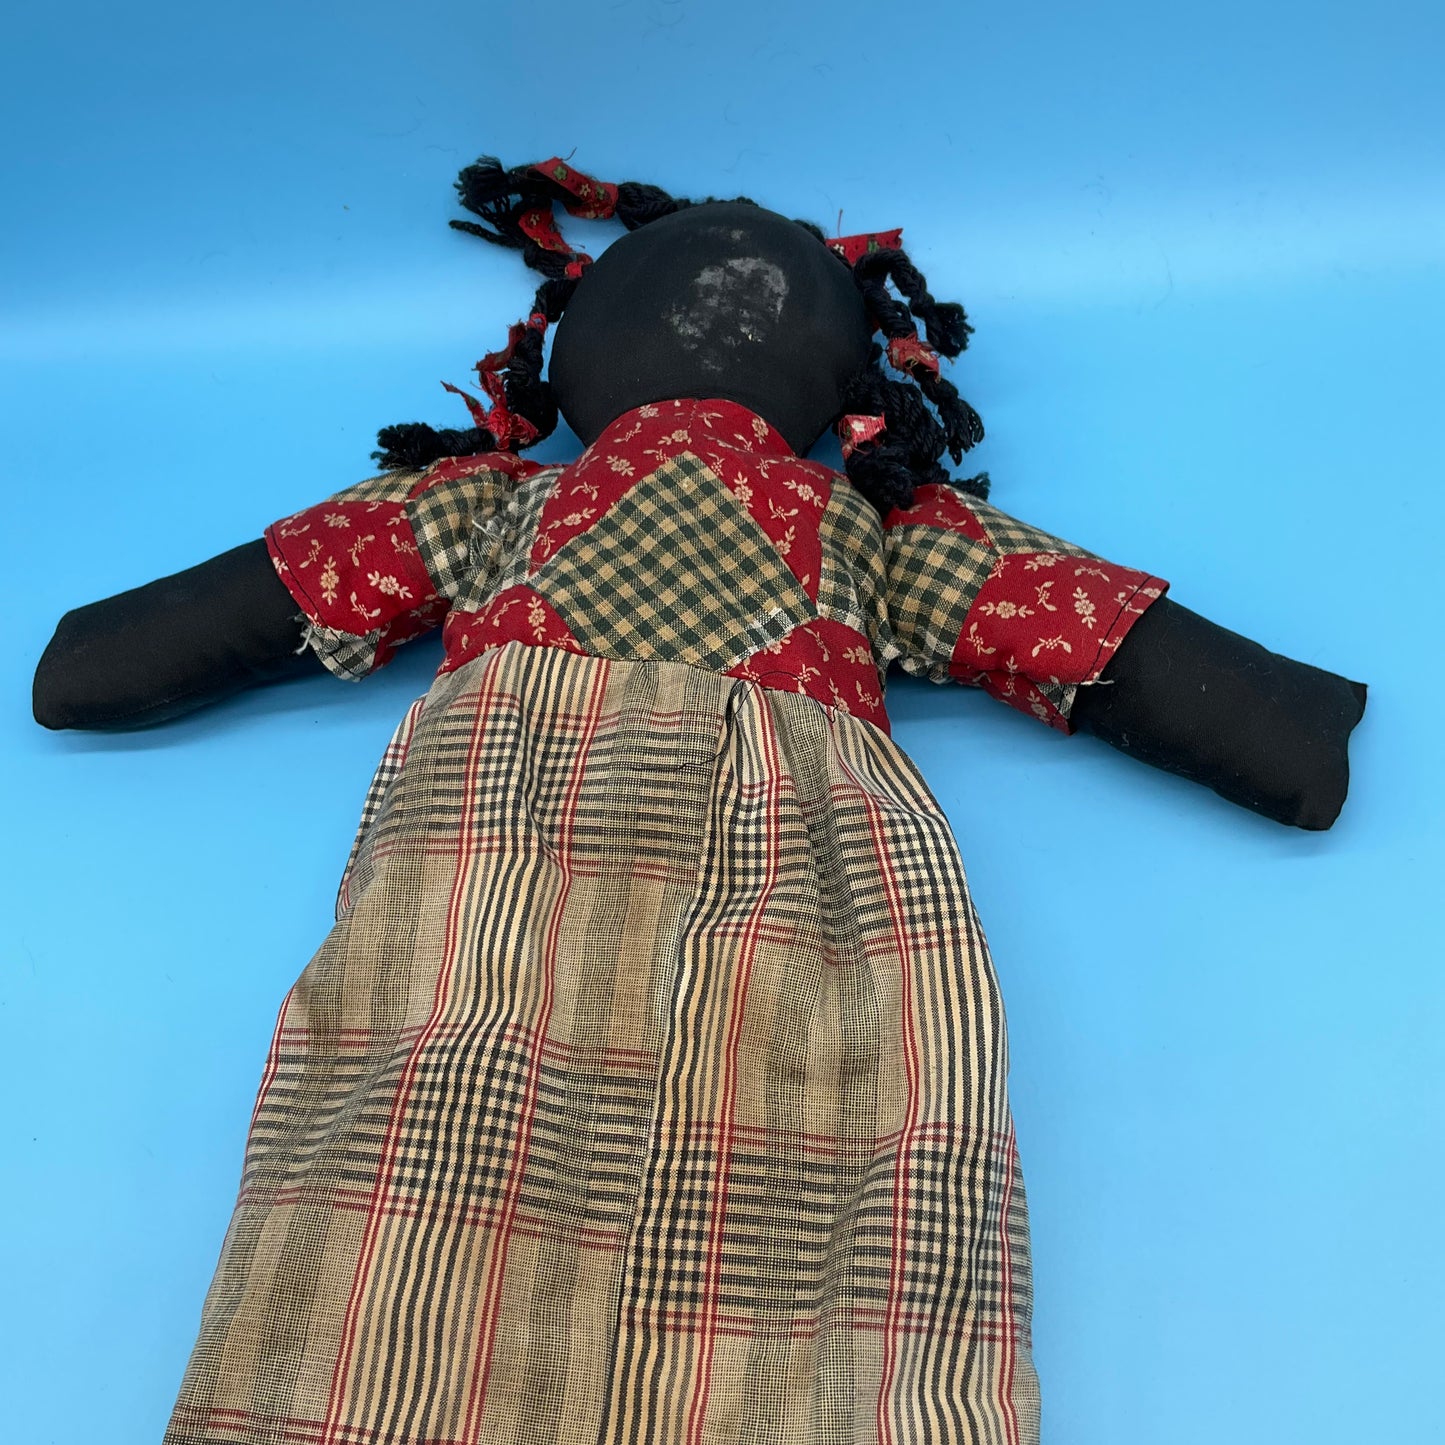 Black American Rag Doll 17"